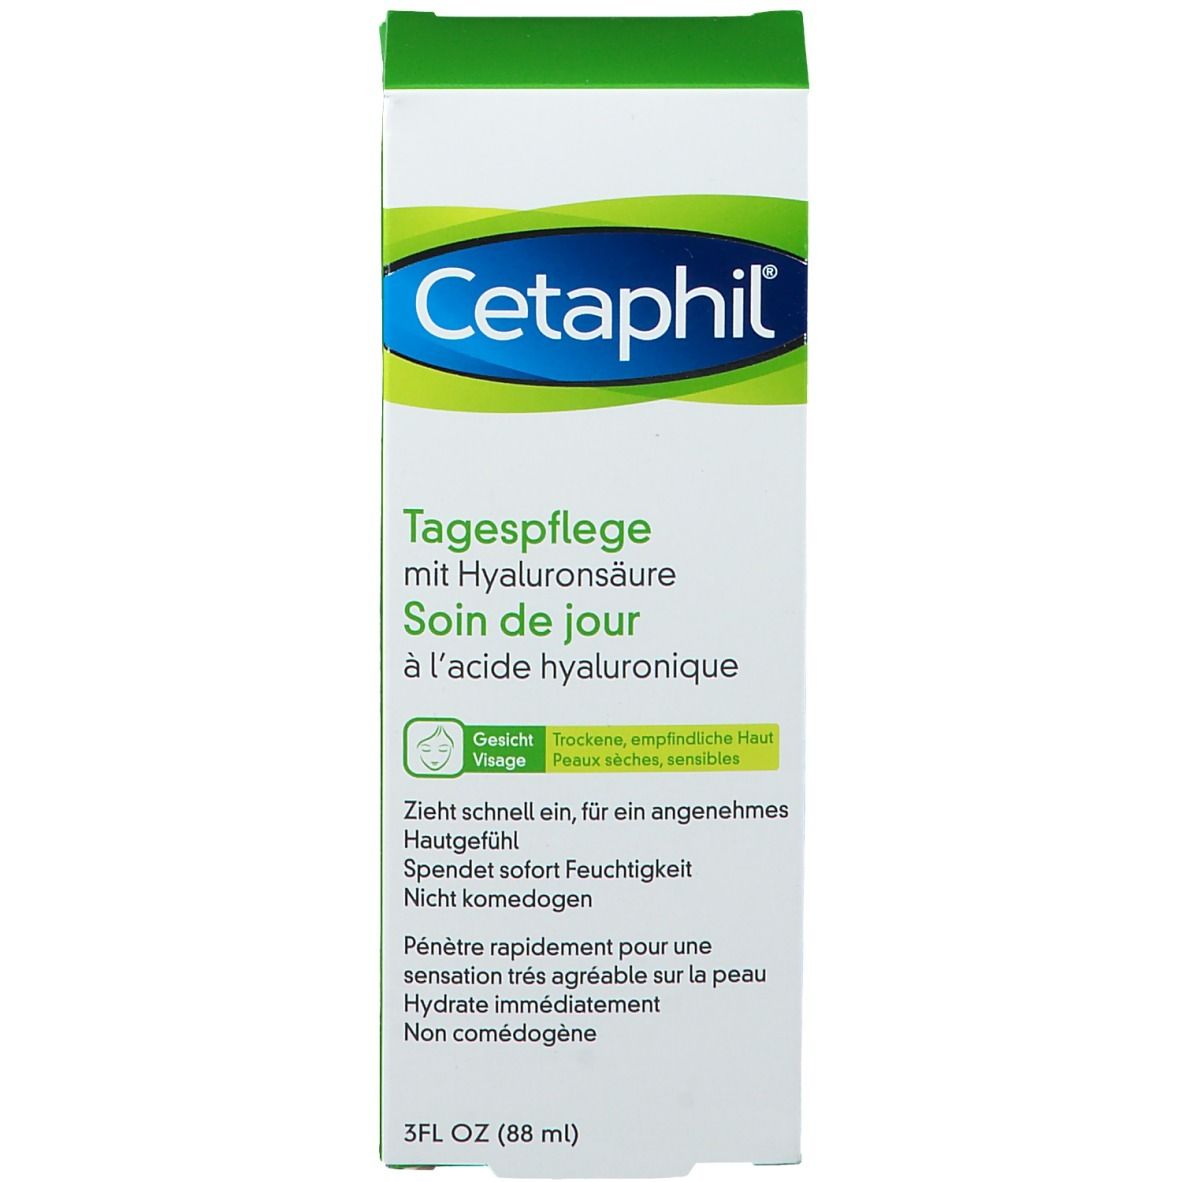 B. Cetaphil® Tagespflege mit Hyaluronsäure